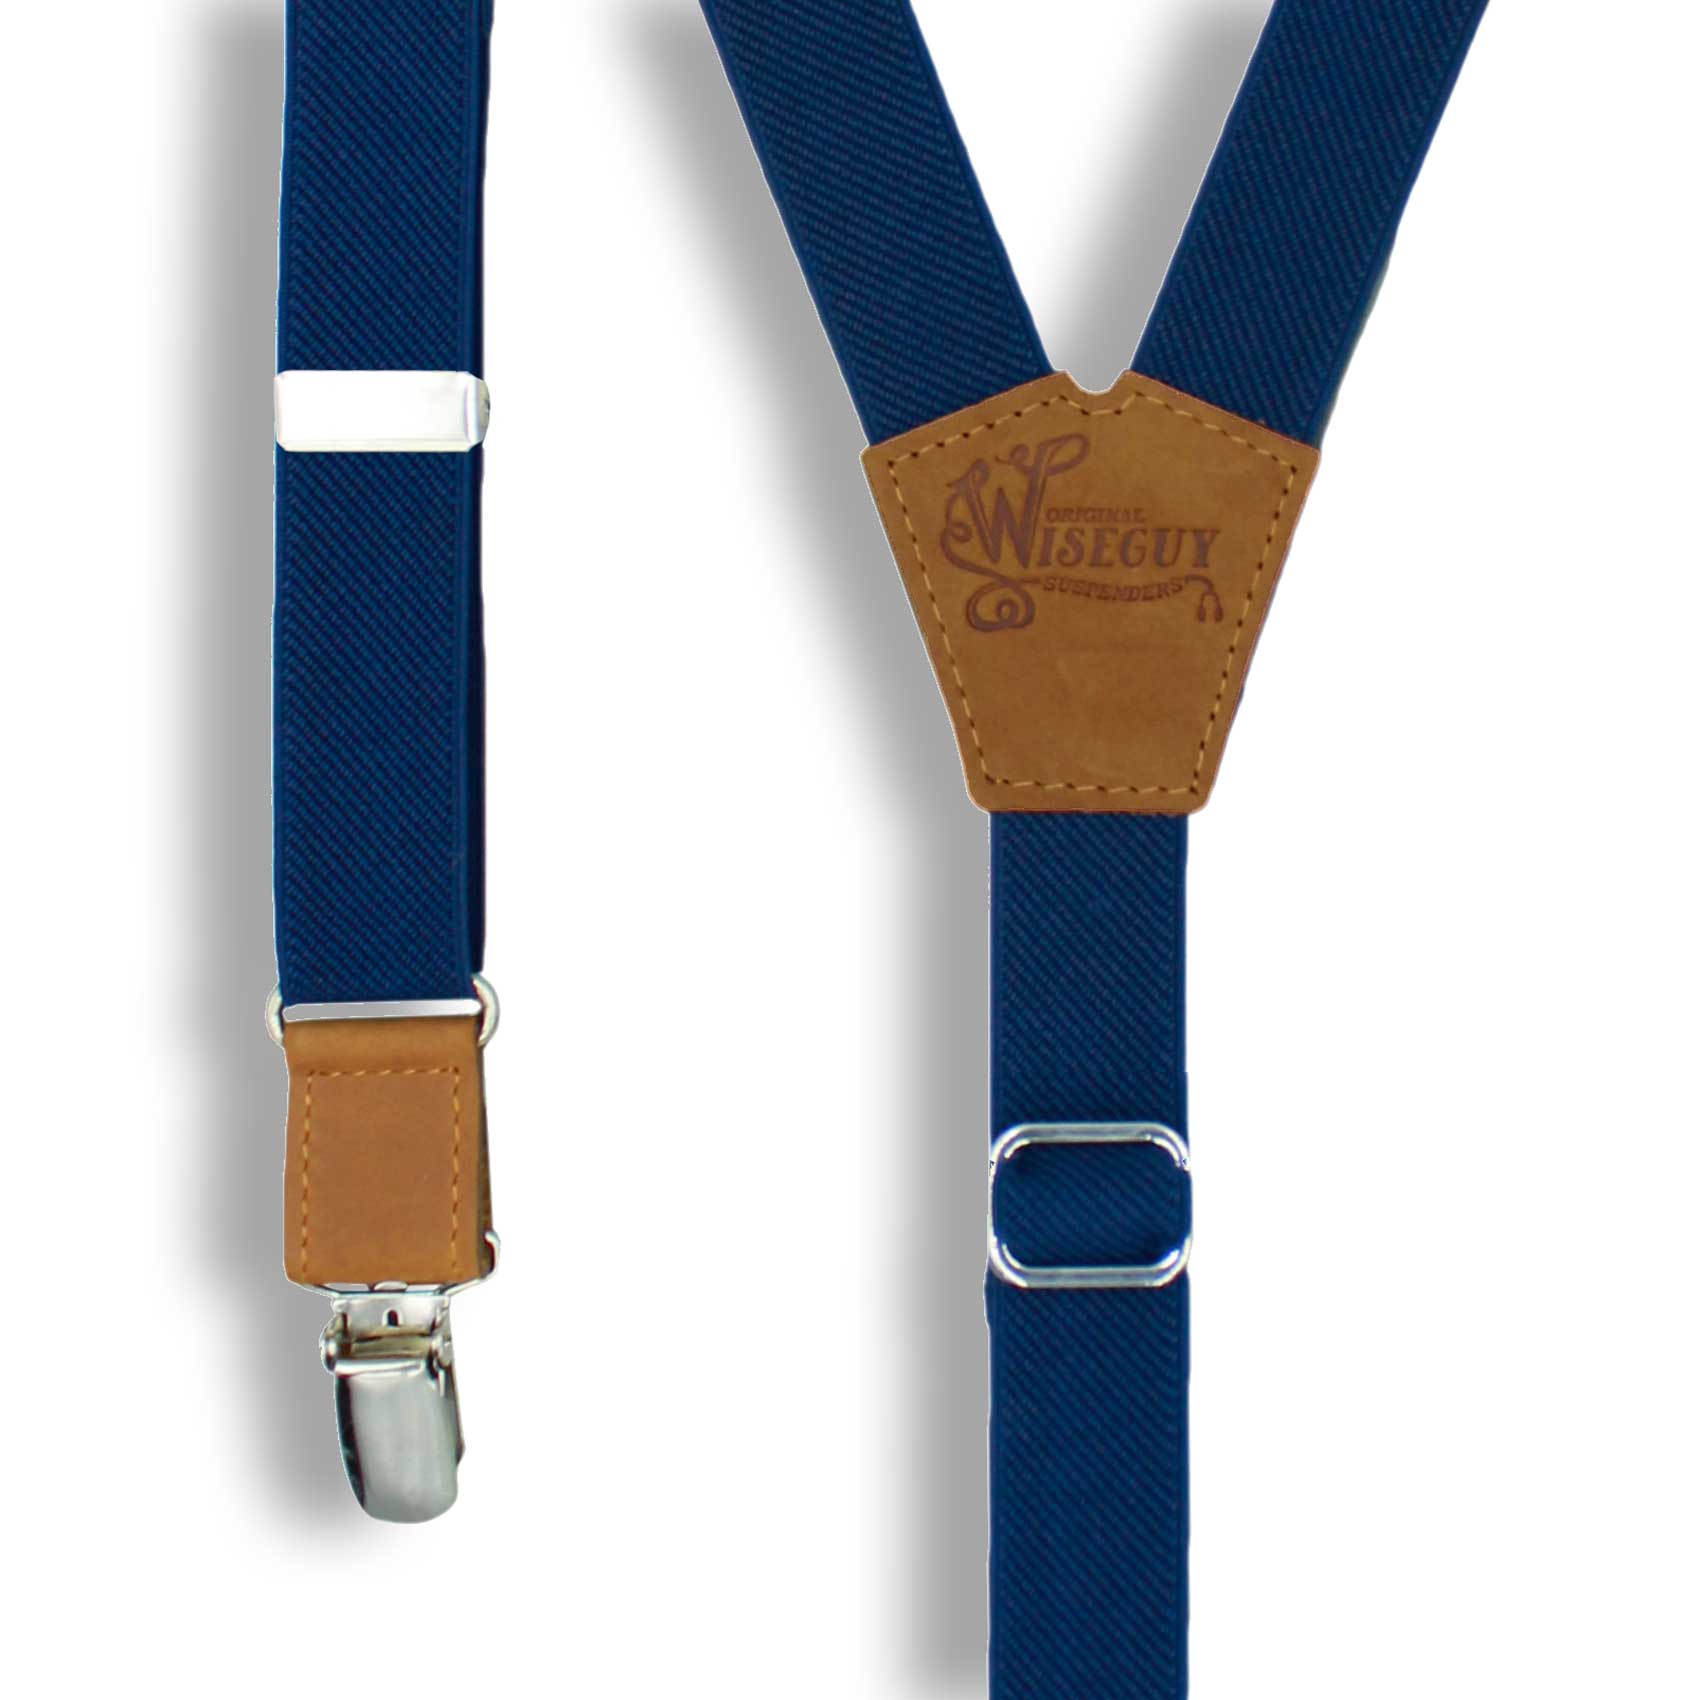 Navy Blue Suspenders slim straps (1 inch/2.54 cm) - Wiseguy Suspenders